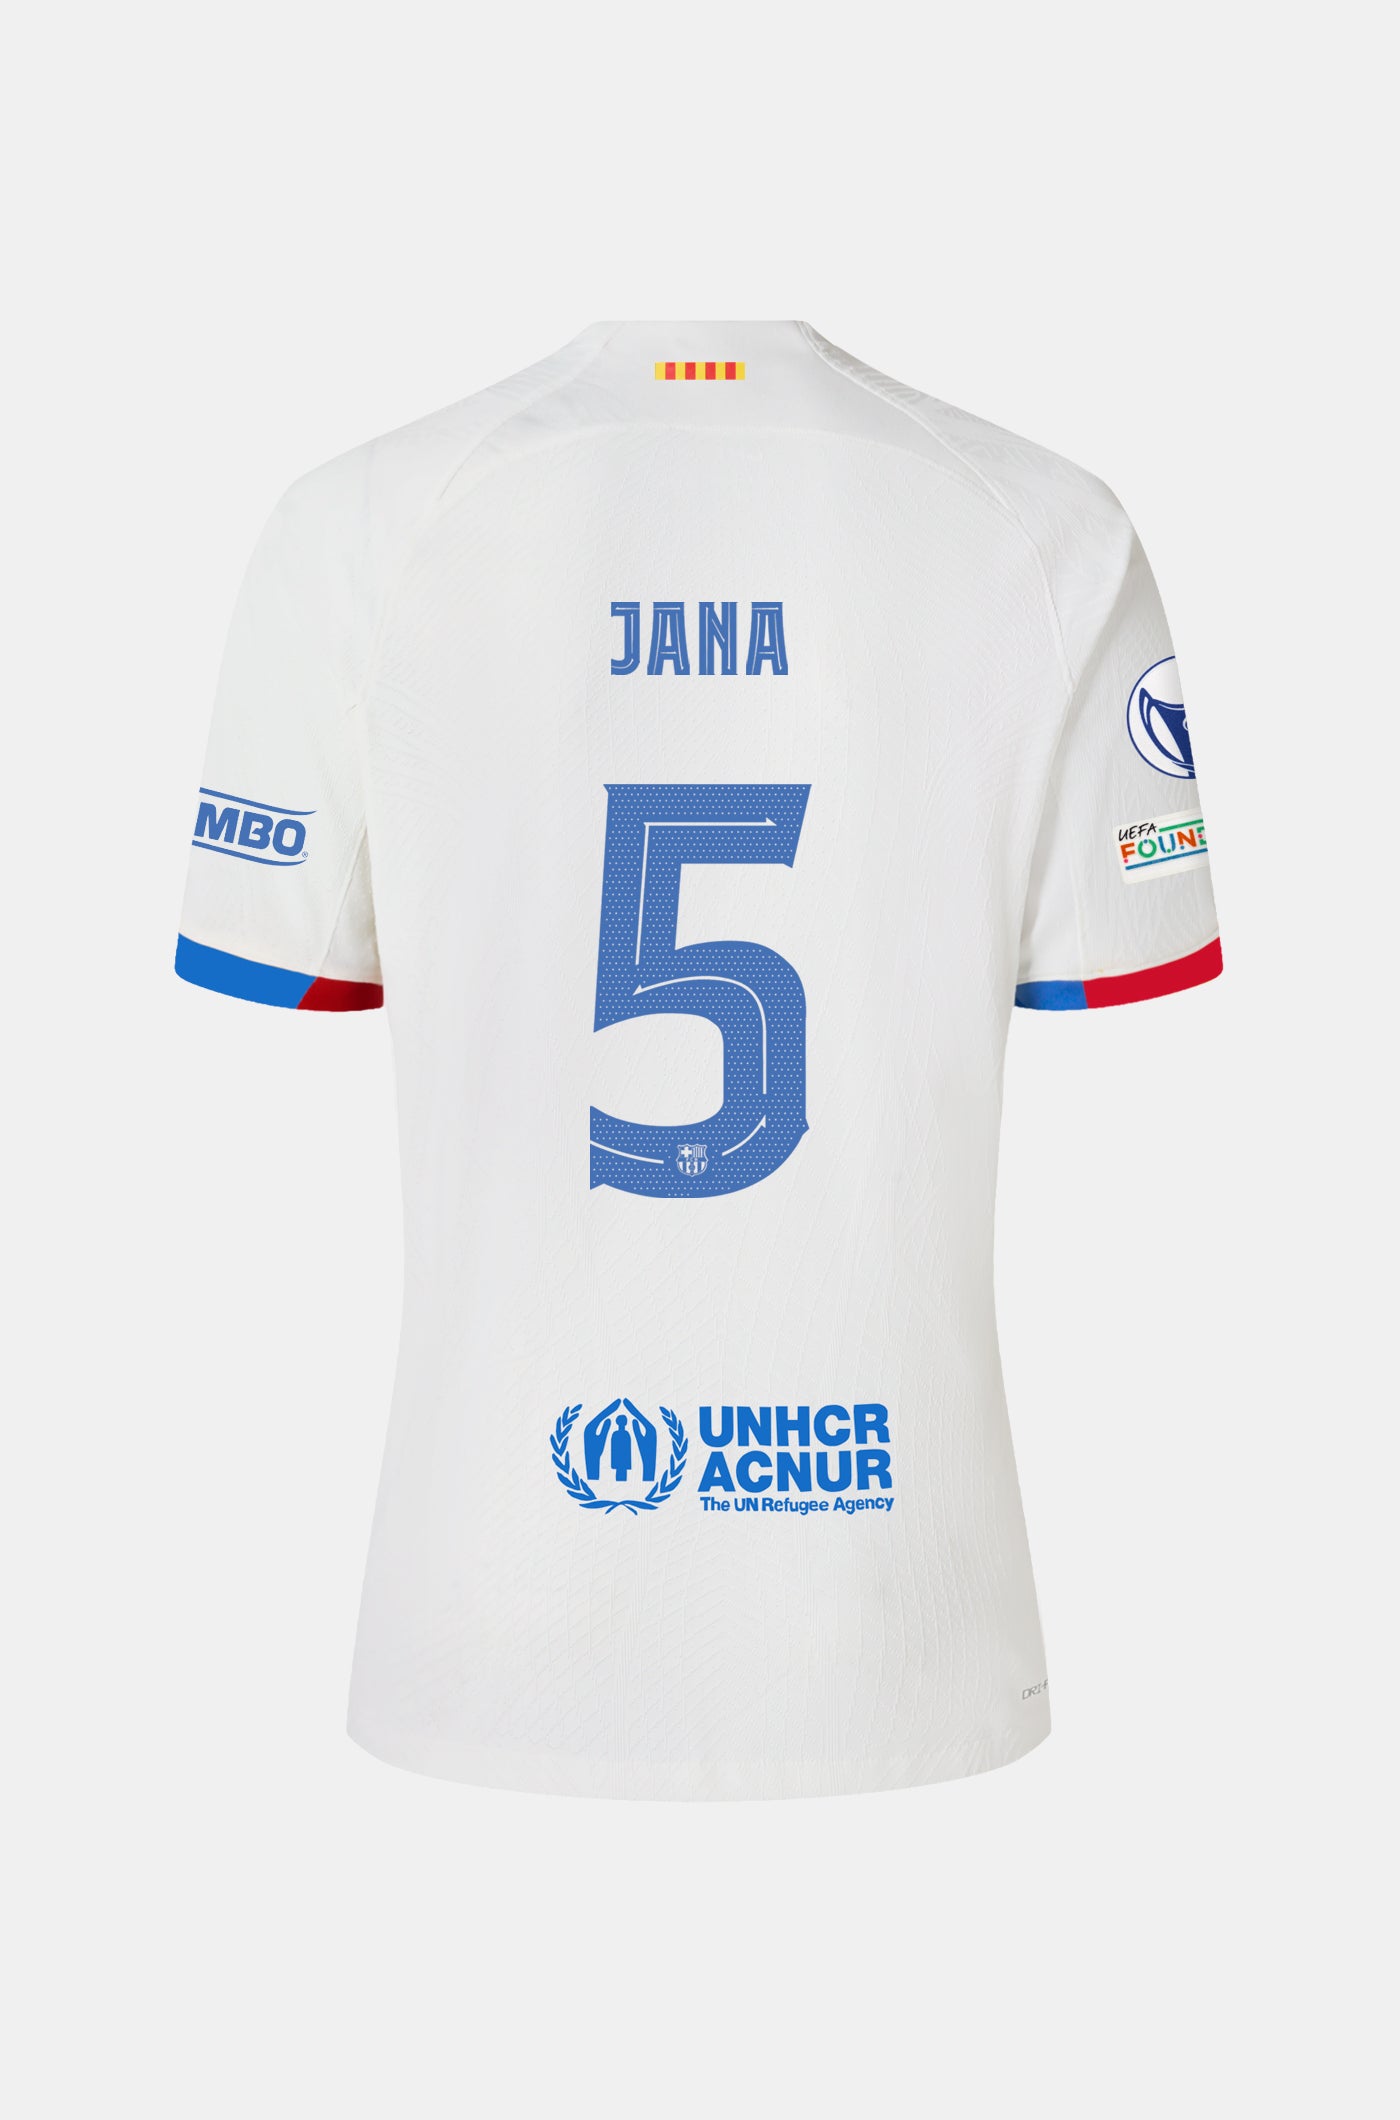 UWCL FC Barcelona Away Shirt 23/24 Player’s Edition - Women  - JANA